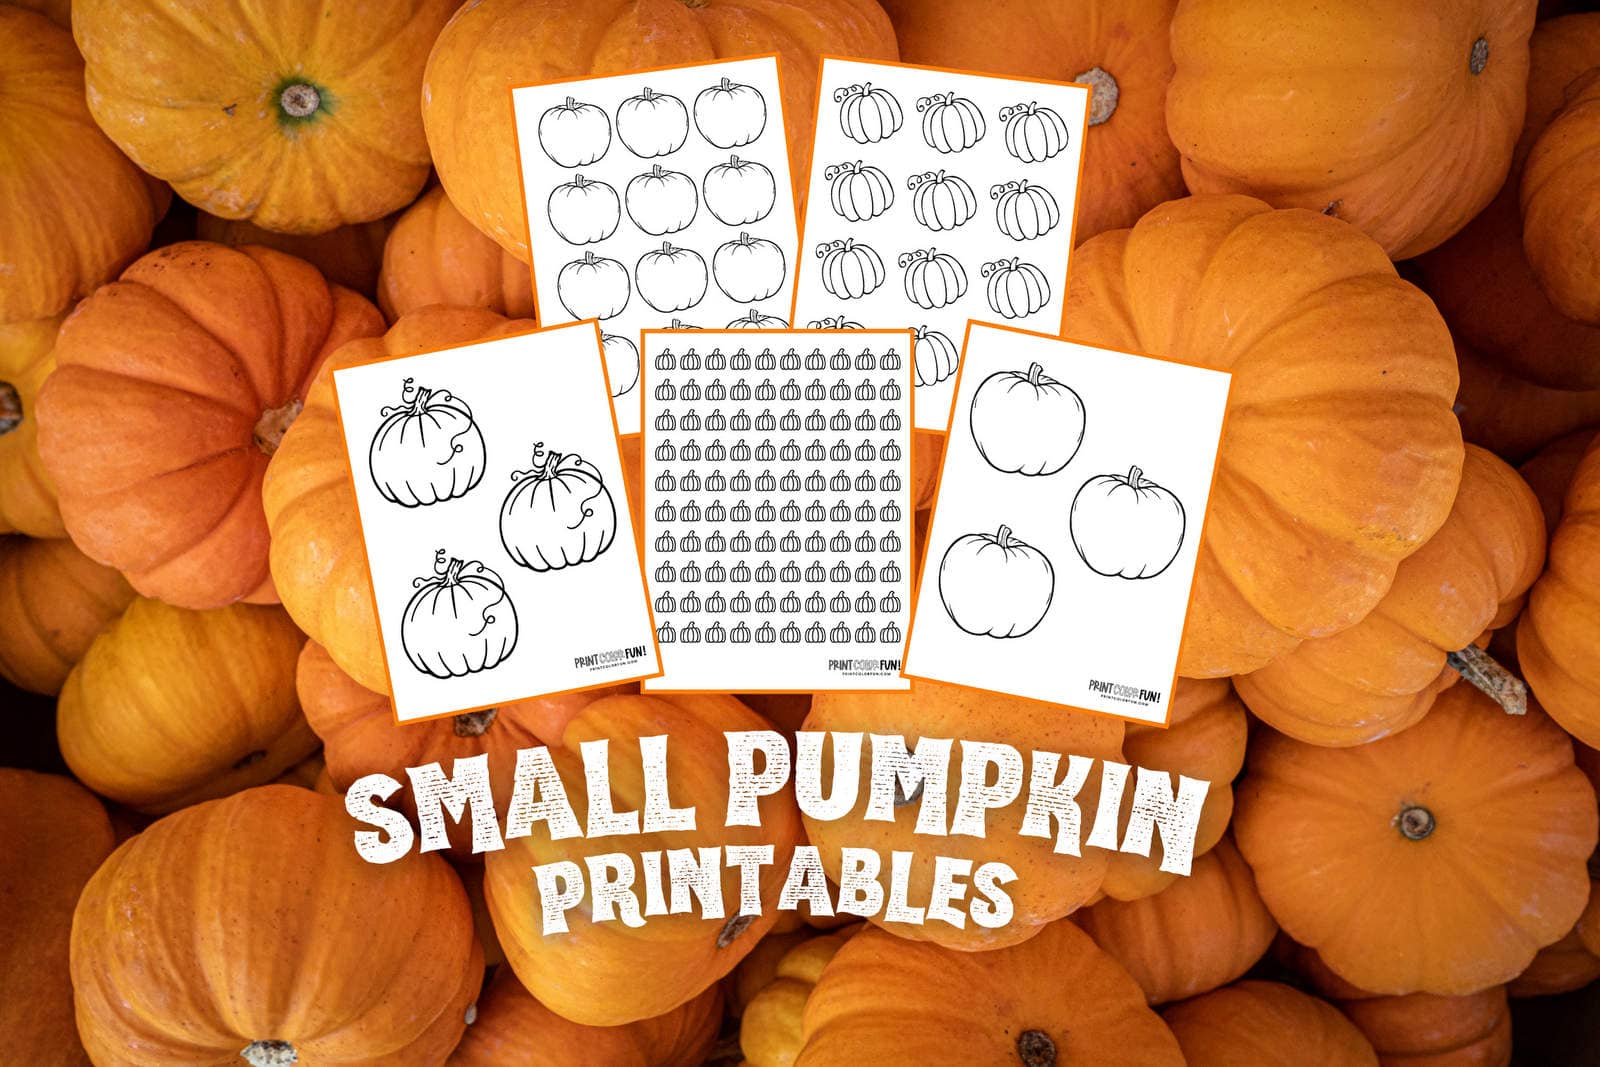 Small pumpkin printables to cut or color at PrintColorFun com